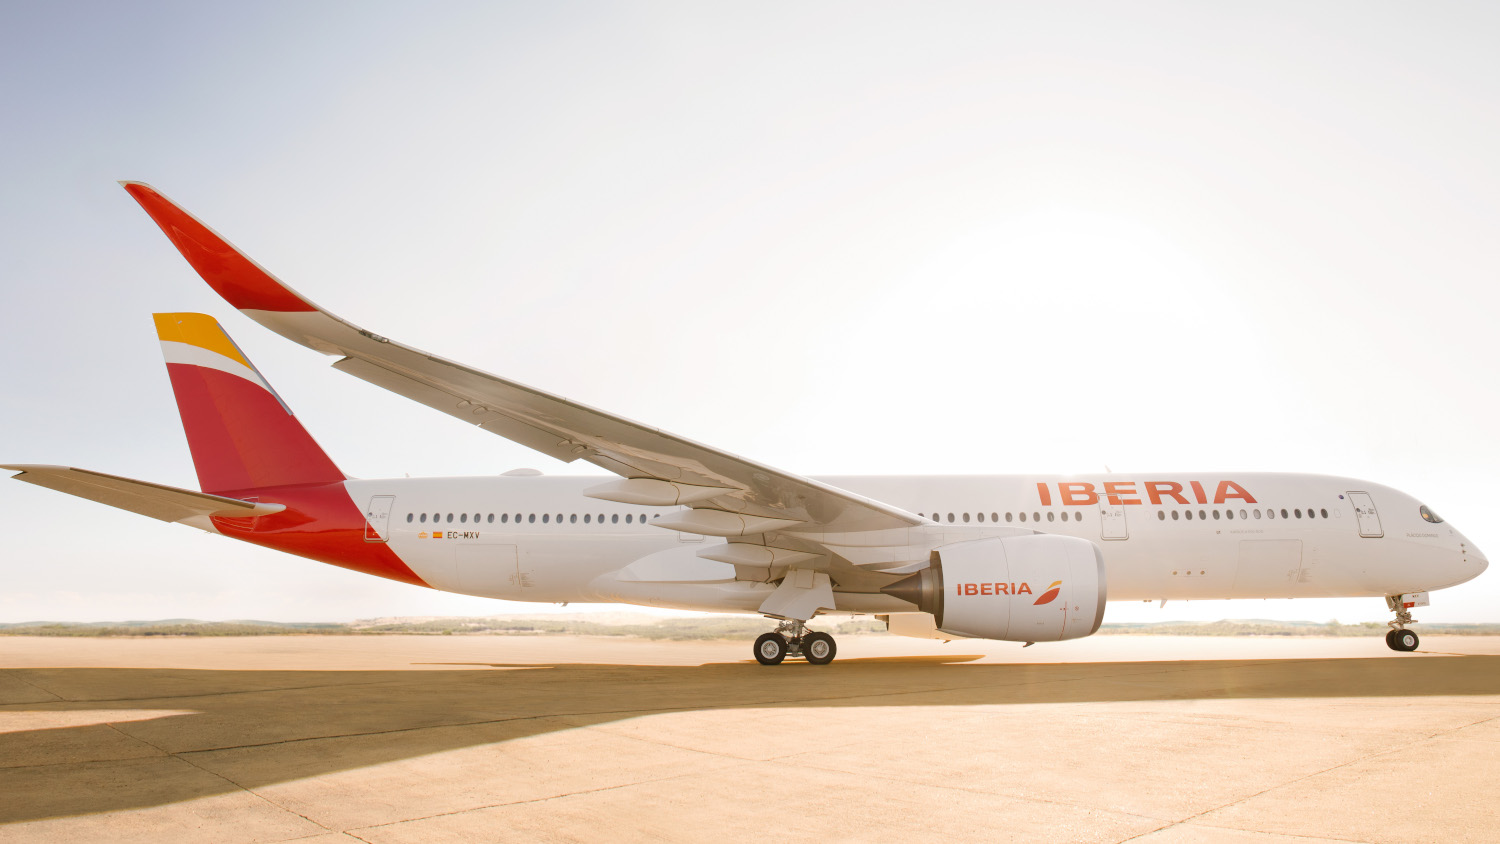 Compra Avios de Iberia Plus con un 50% adicional.